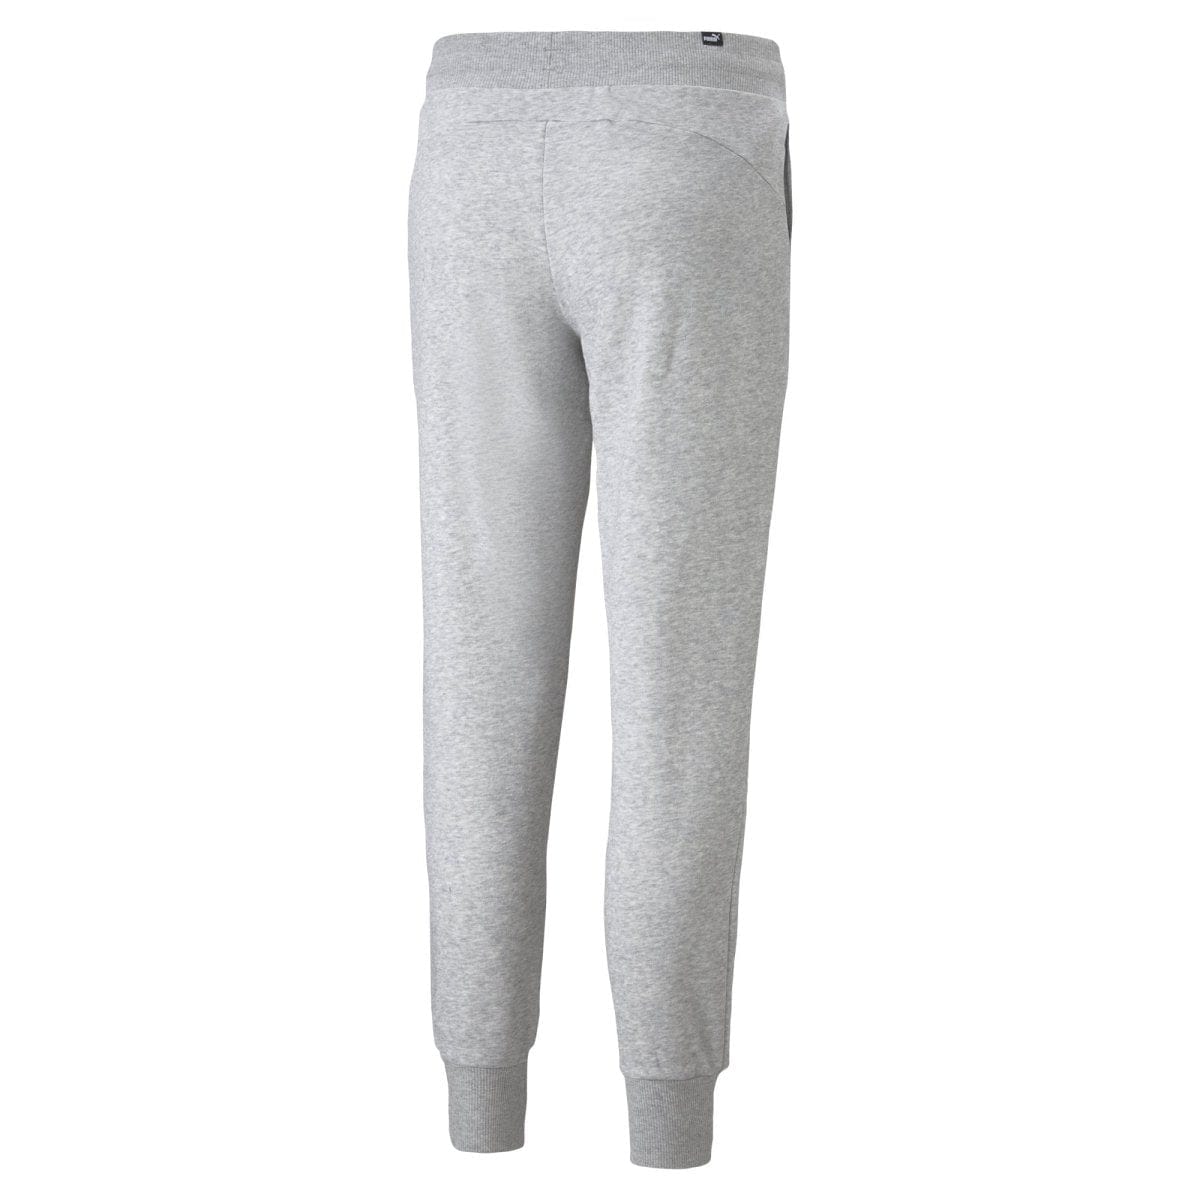 Women's Grey Sweatpants